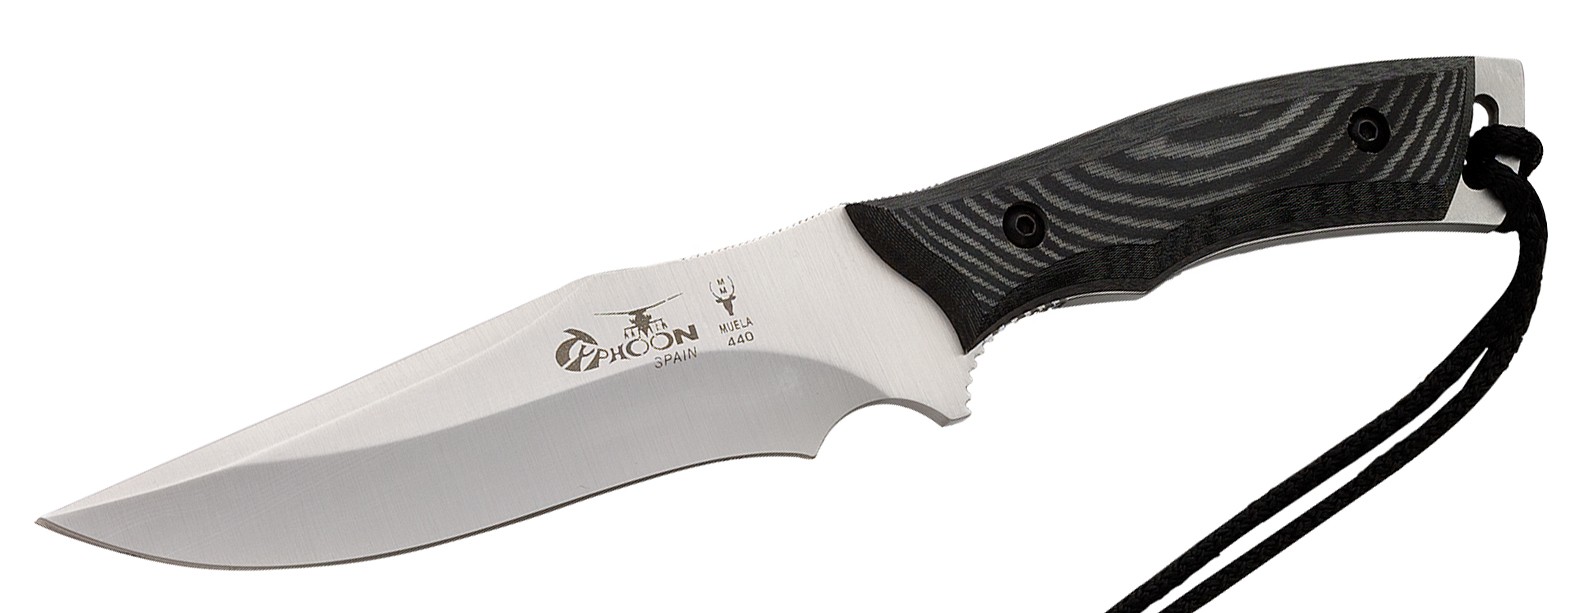 Нож Muela Typhoon фикс. клинок сталь 440C рукоять микарта  - фото 1